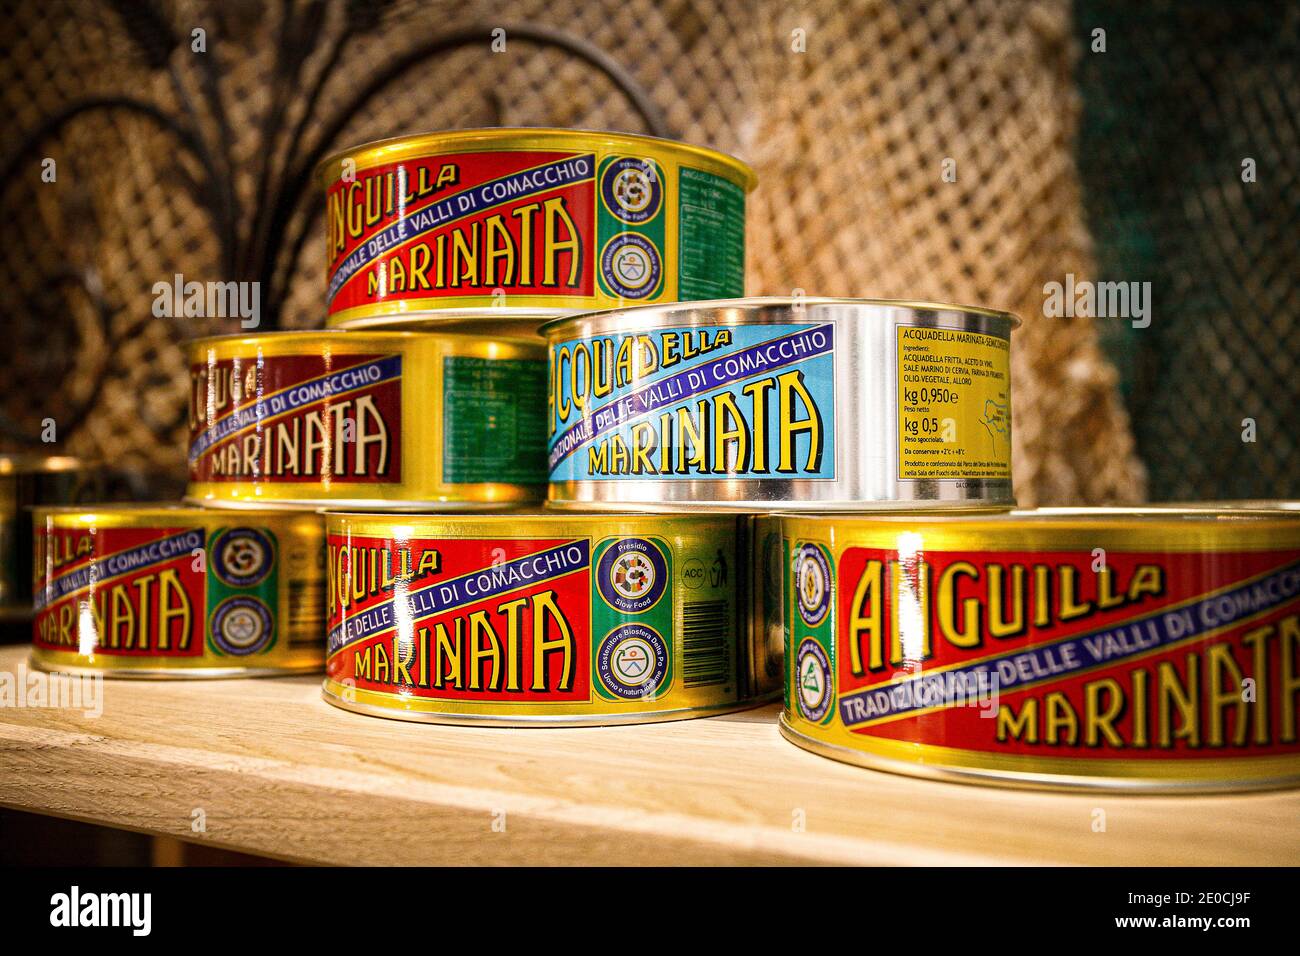 Italy Emilia Romagna - Valli di Comacchio - canned food products - eel marinata, anchovy marinata and acquadella marinata Stock Photo